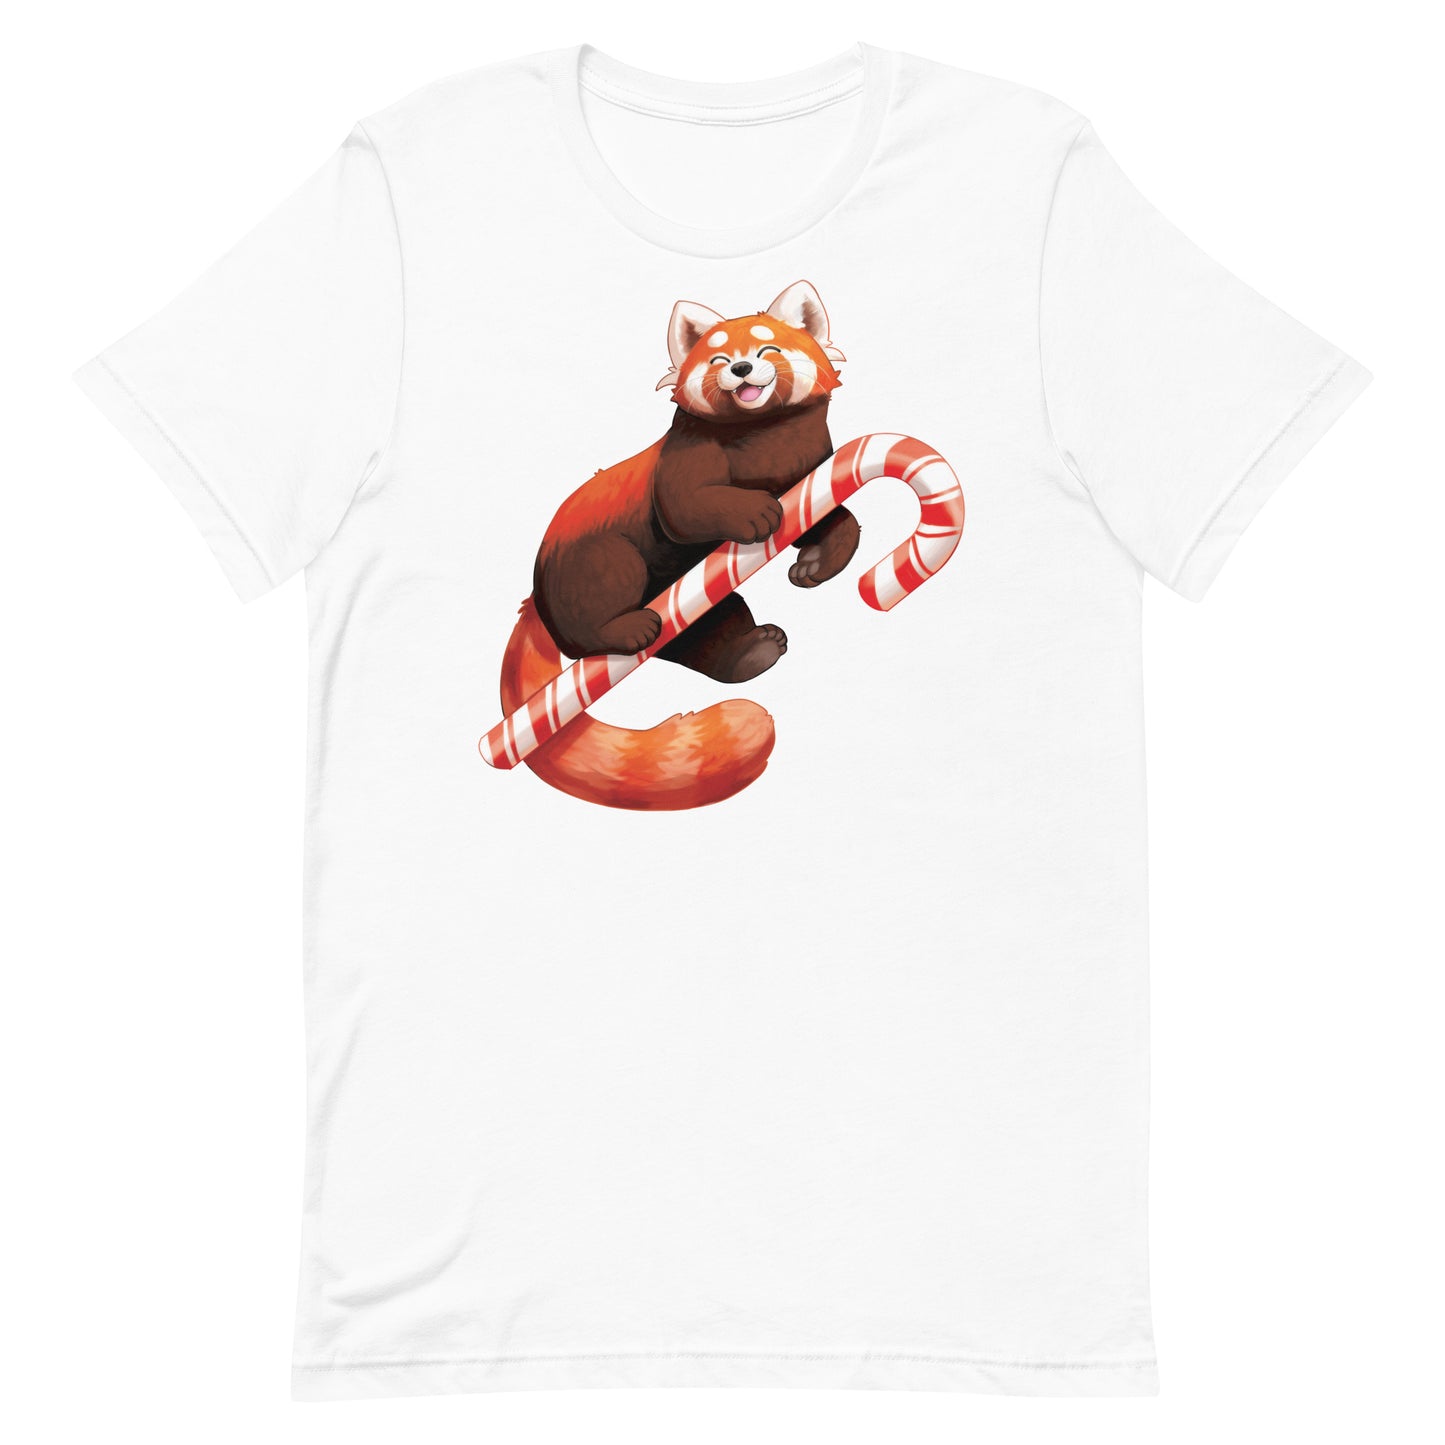 Peppermint Red Panda Unisex T-Shirt by The Shirt Hoard